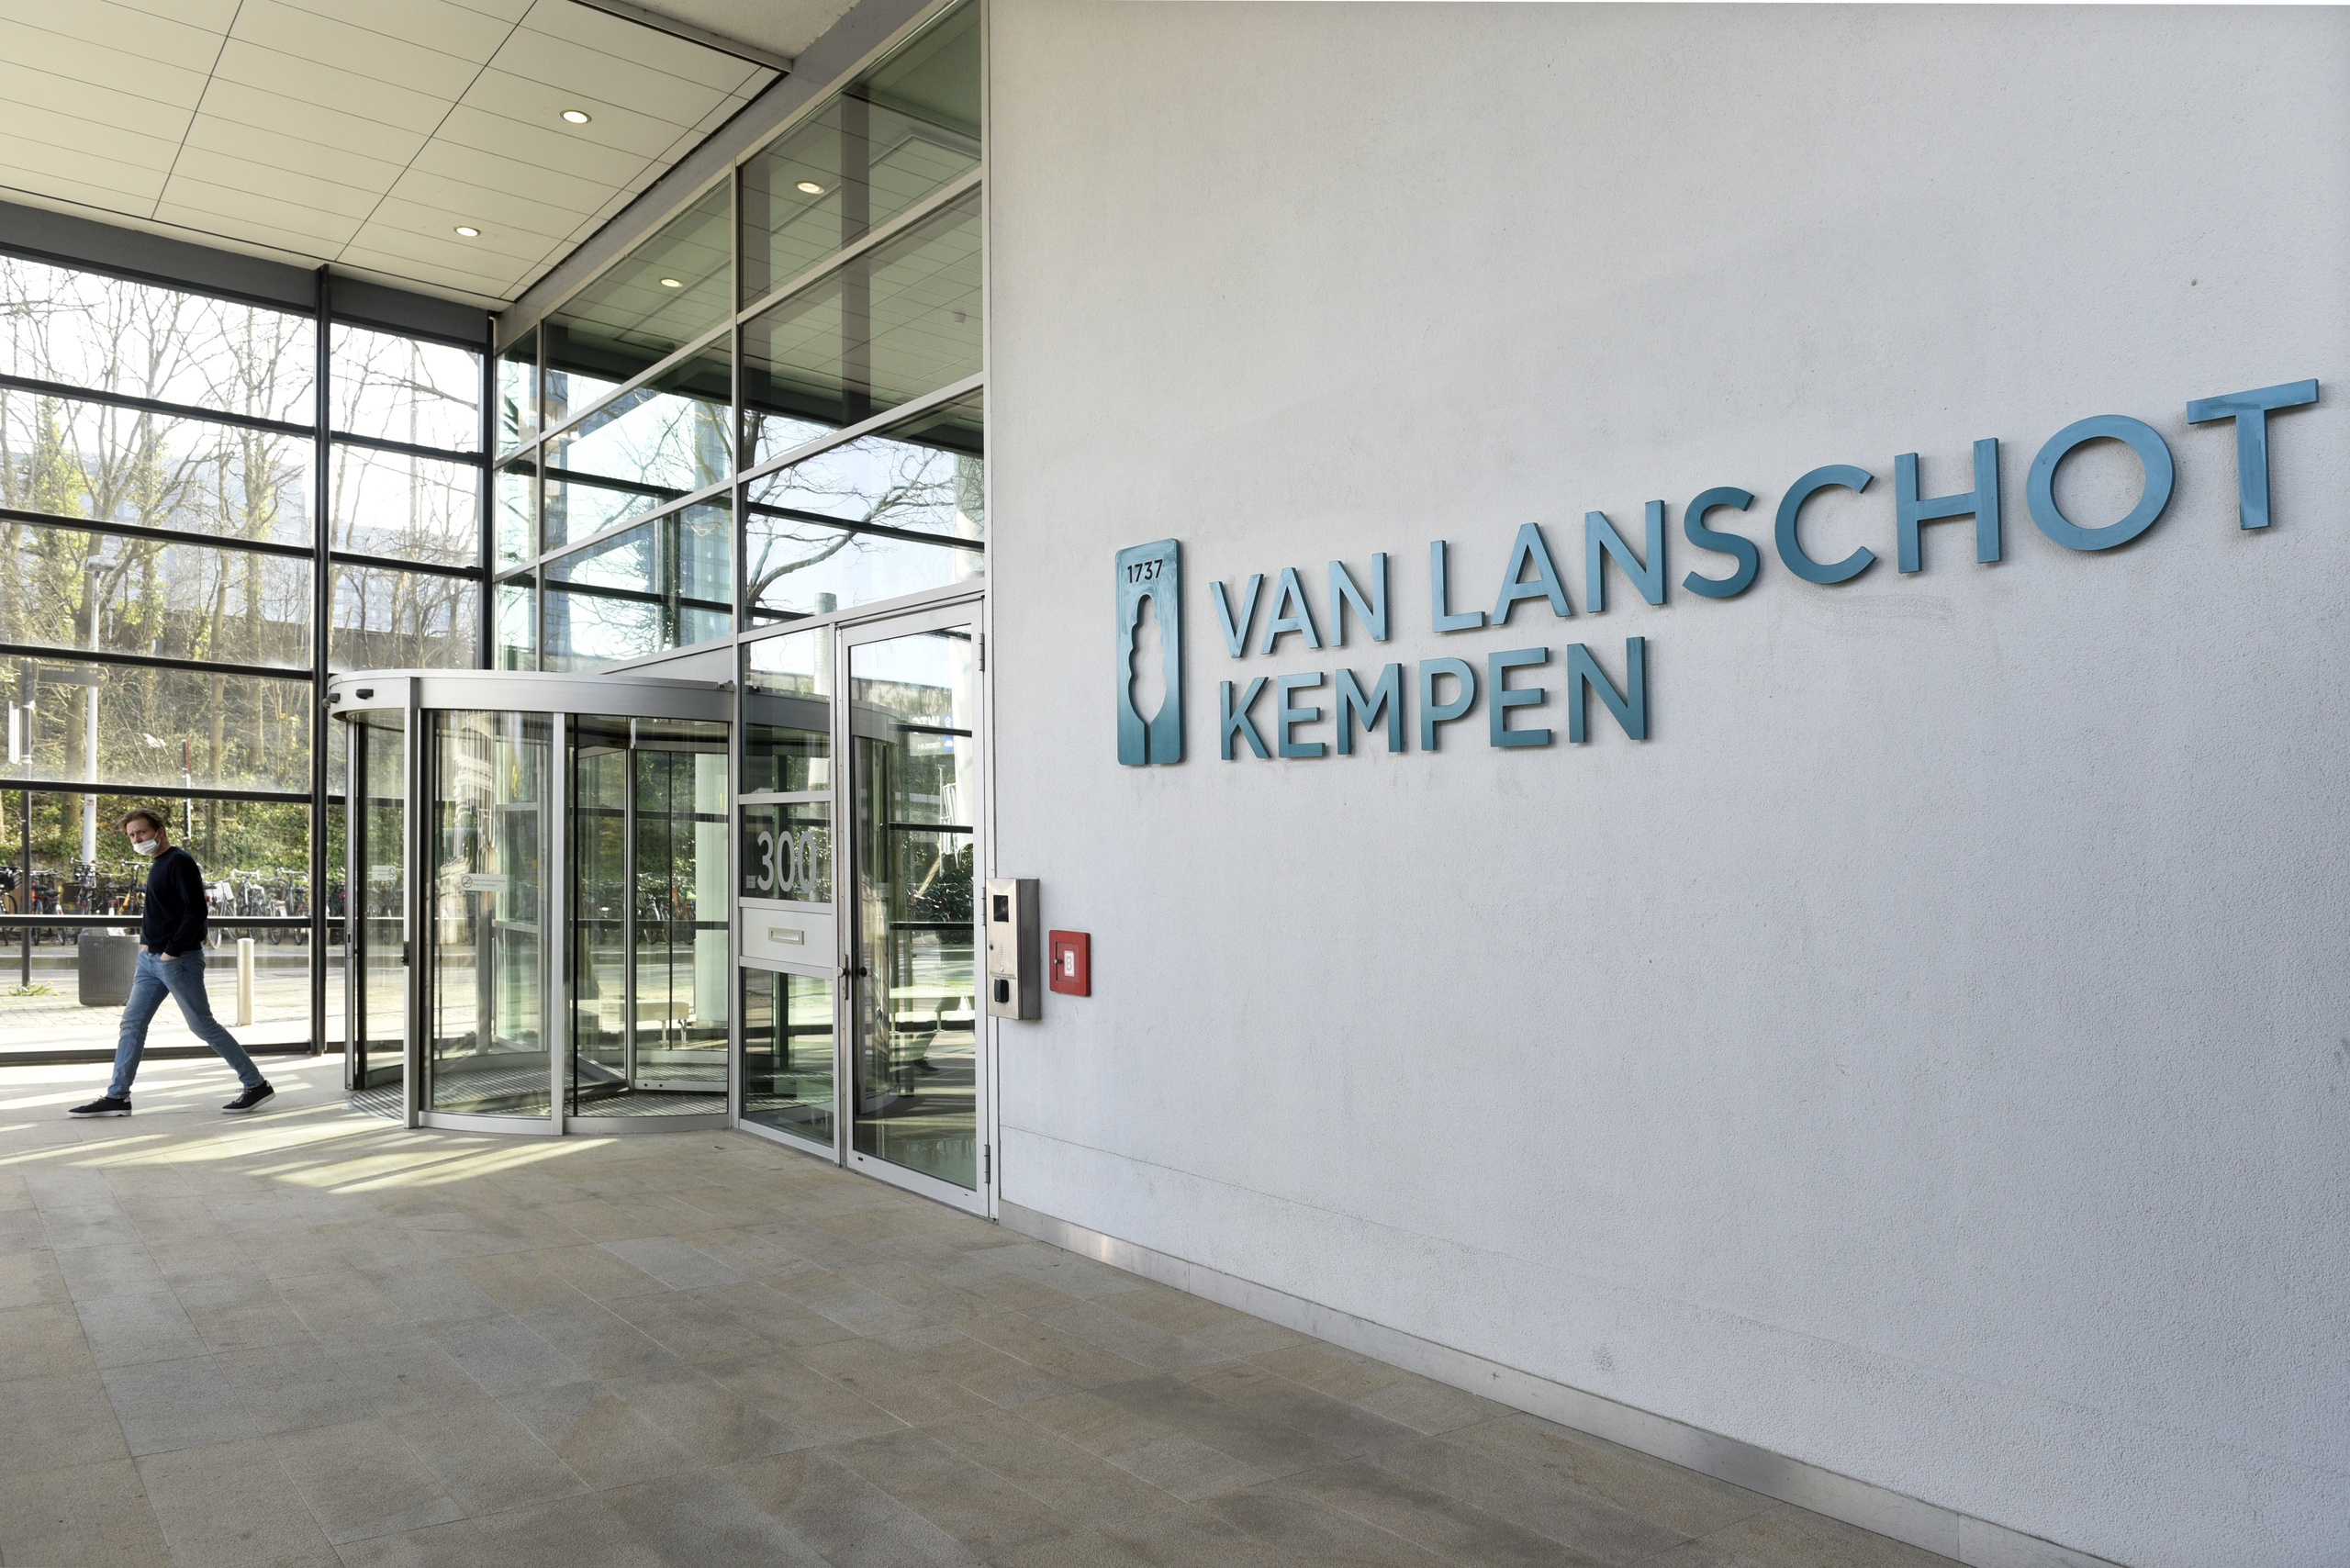 Van Lanschot Kempen still positive despite significant drop in profit